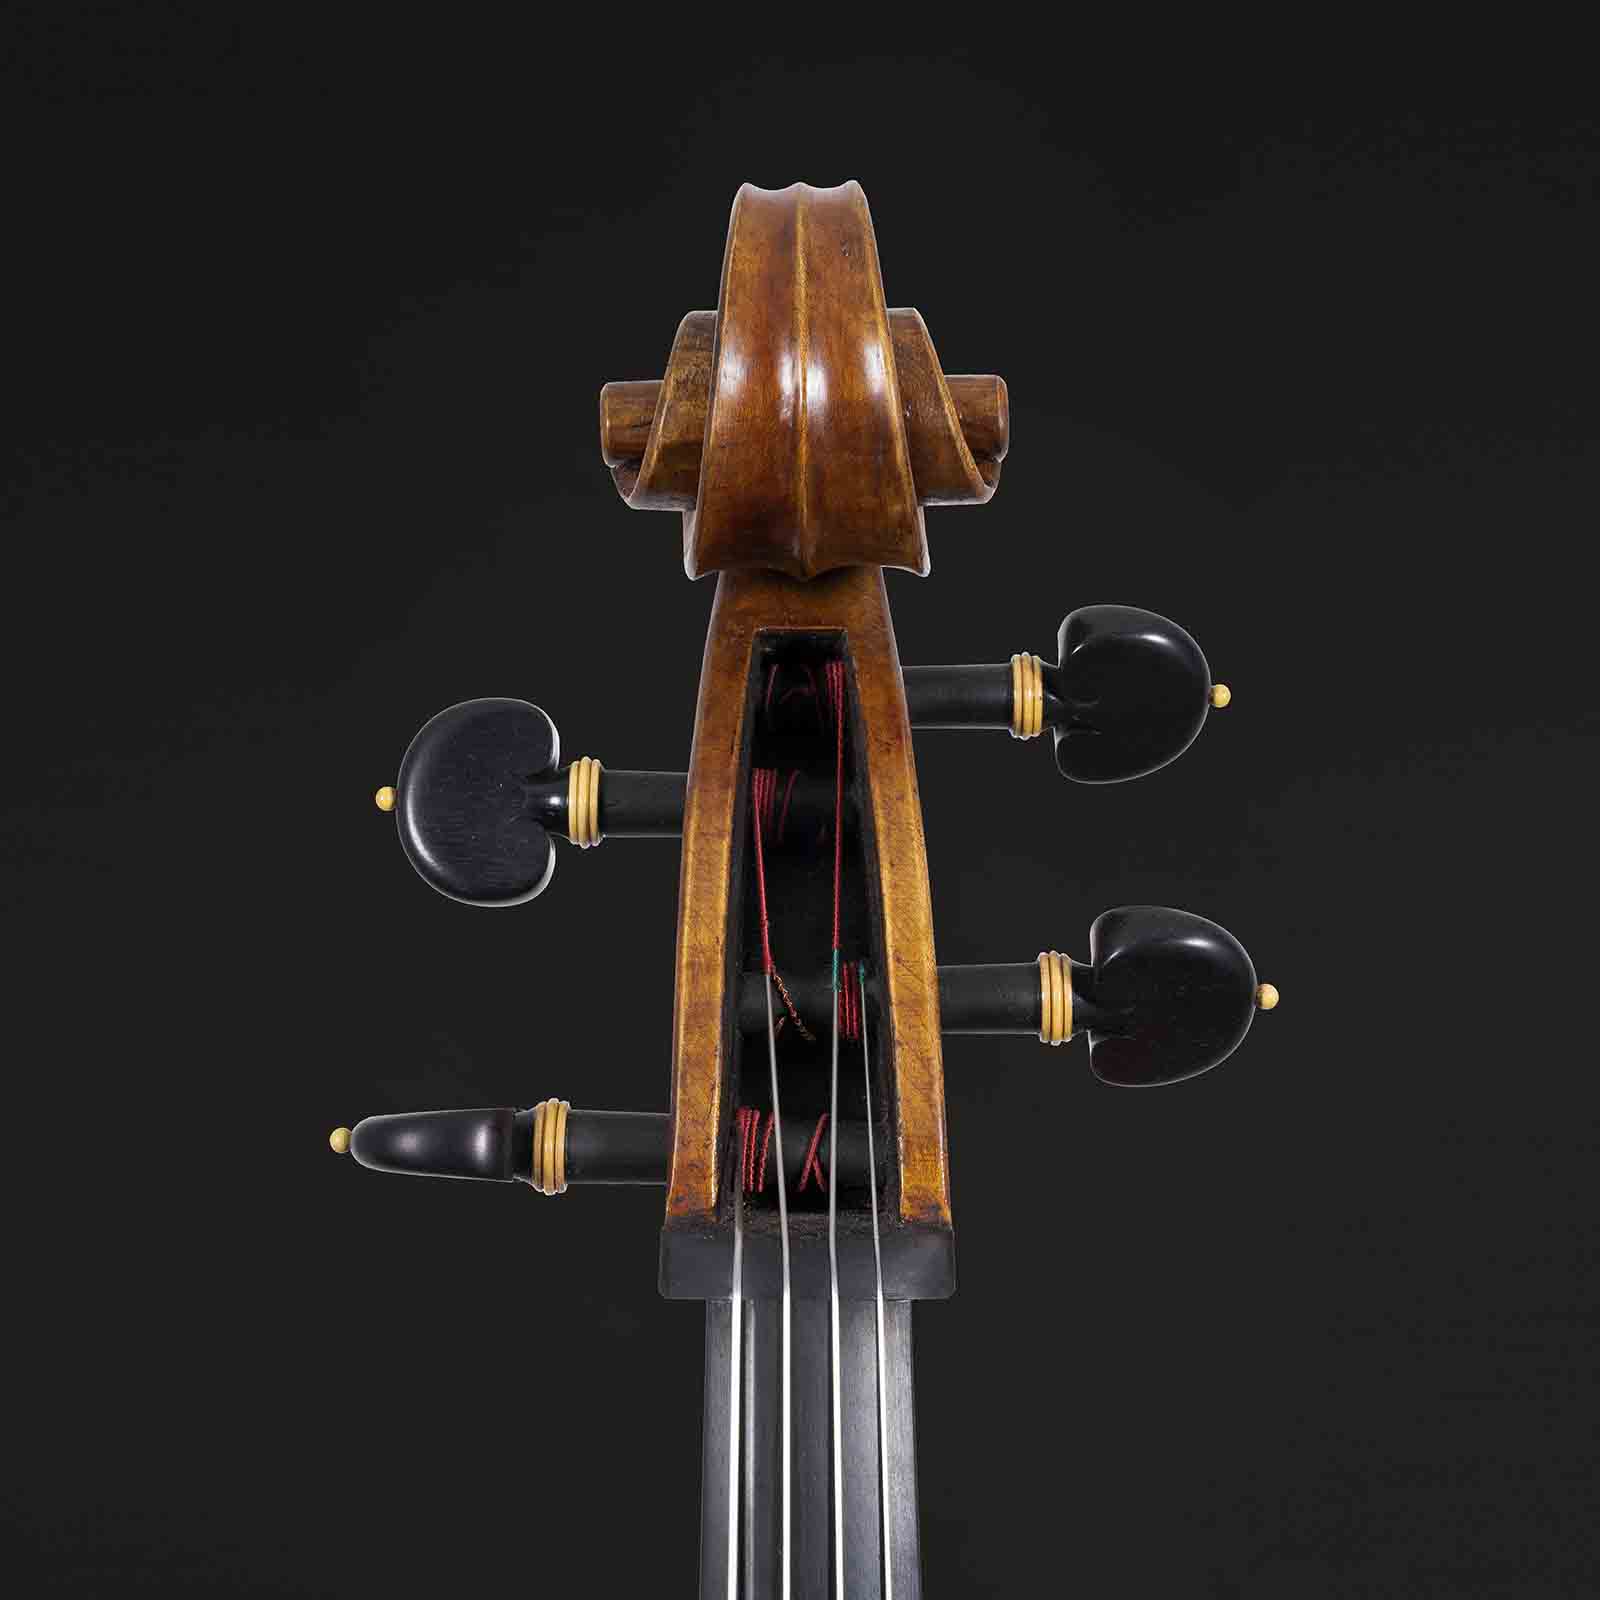 Antonio Stradivari Cremona 1730 “Cristiani“ “Kyoto“ - Image 5